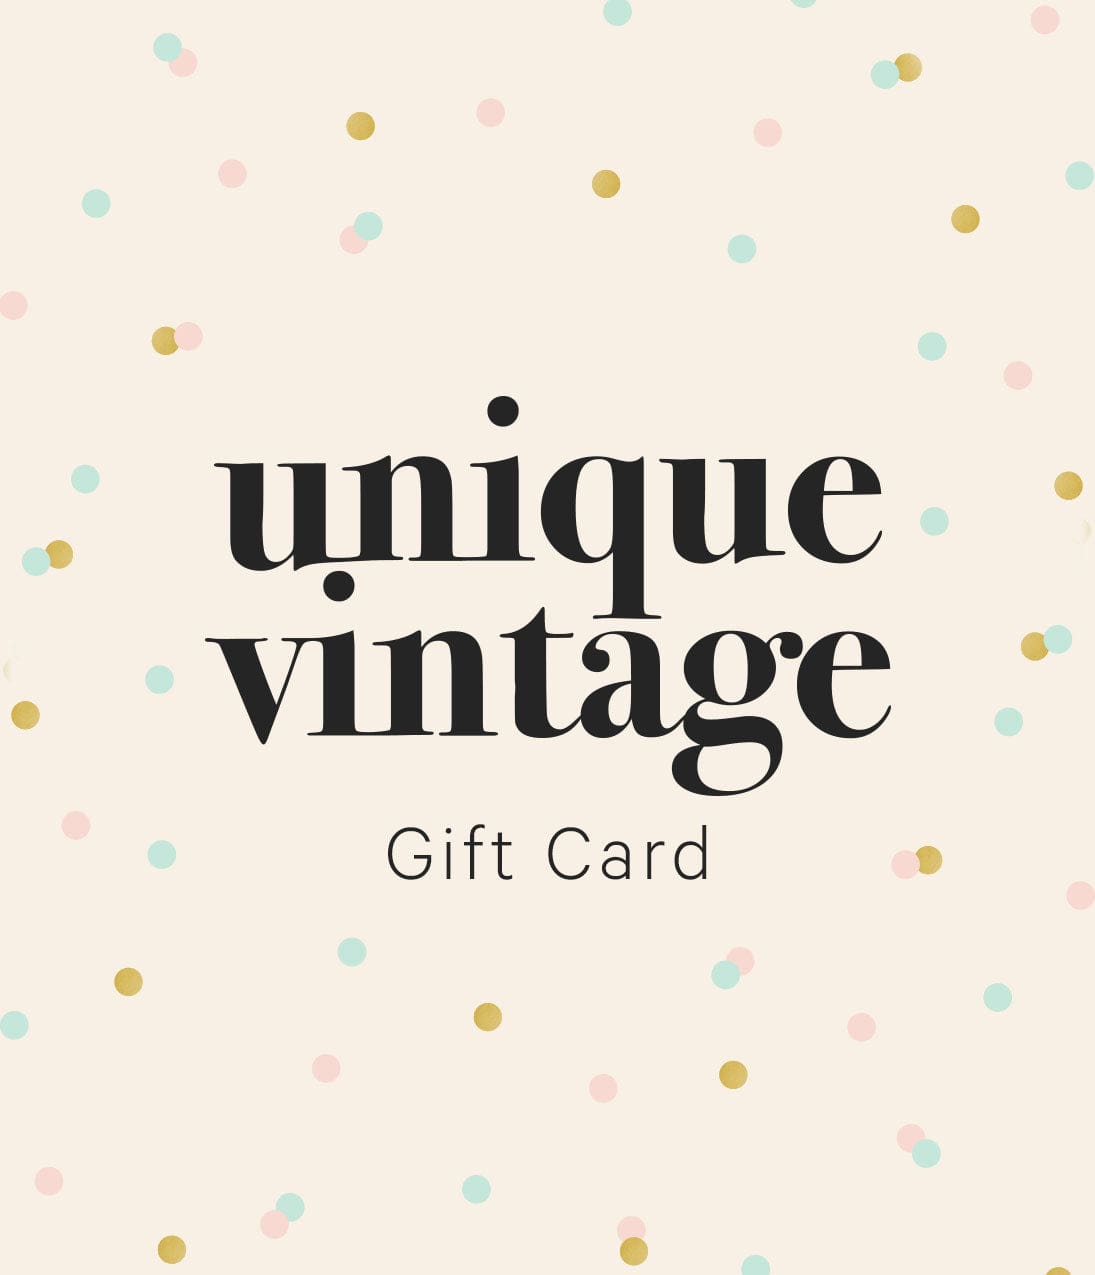 Gift Card - Unique Vintage - Gift Card